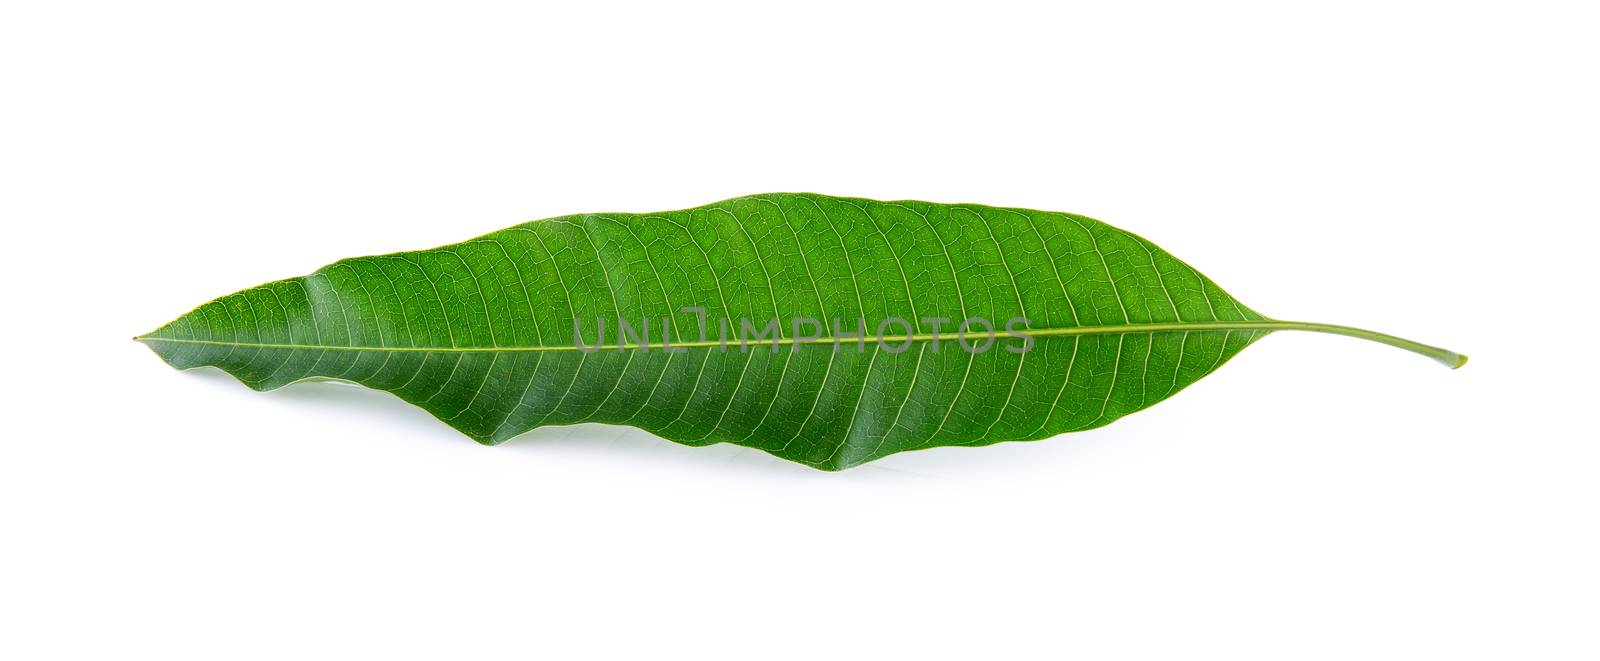 Mango leaf on a white background